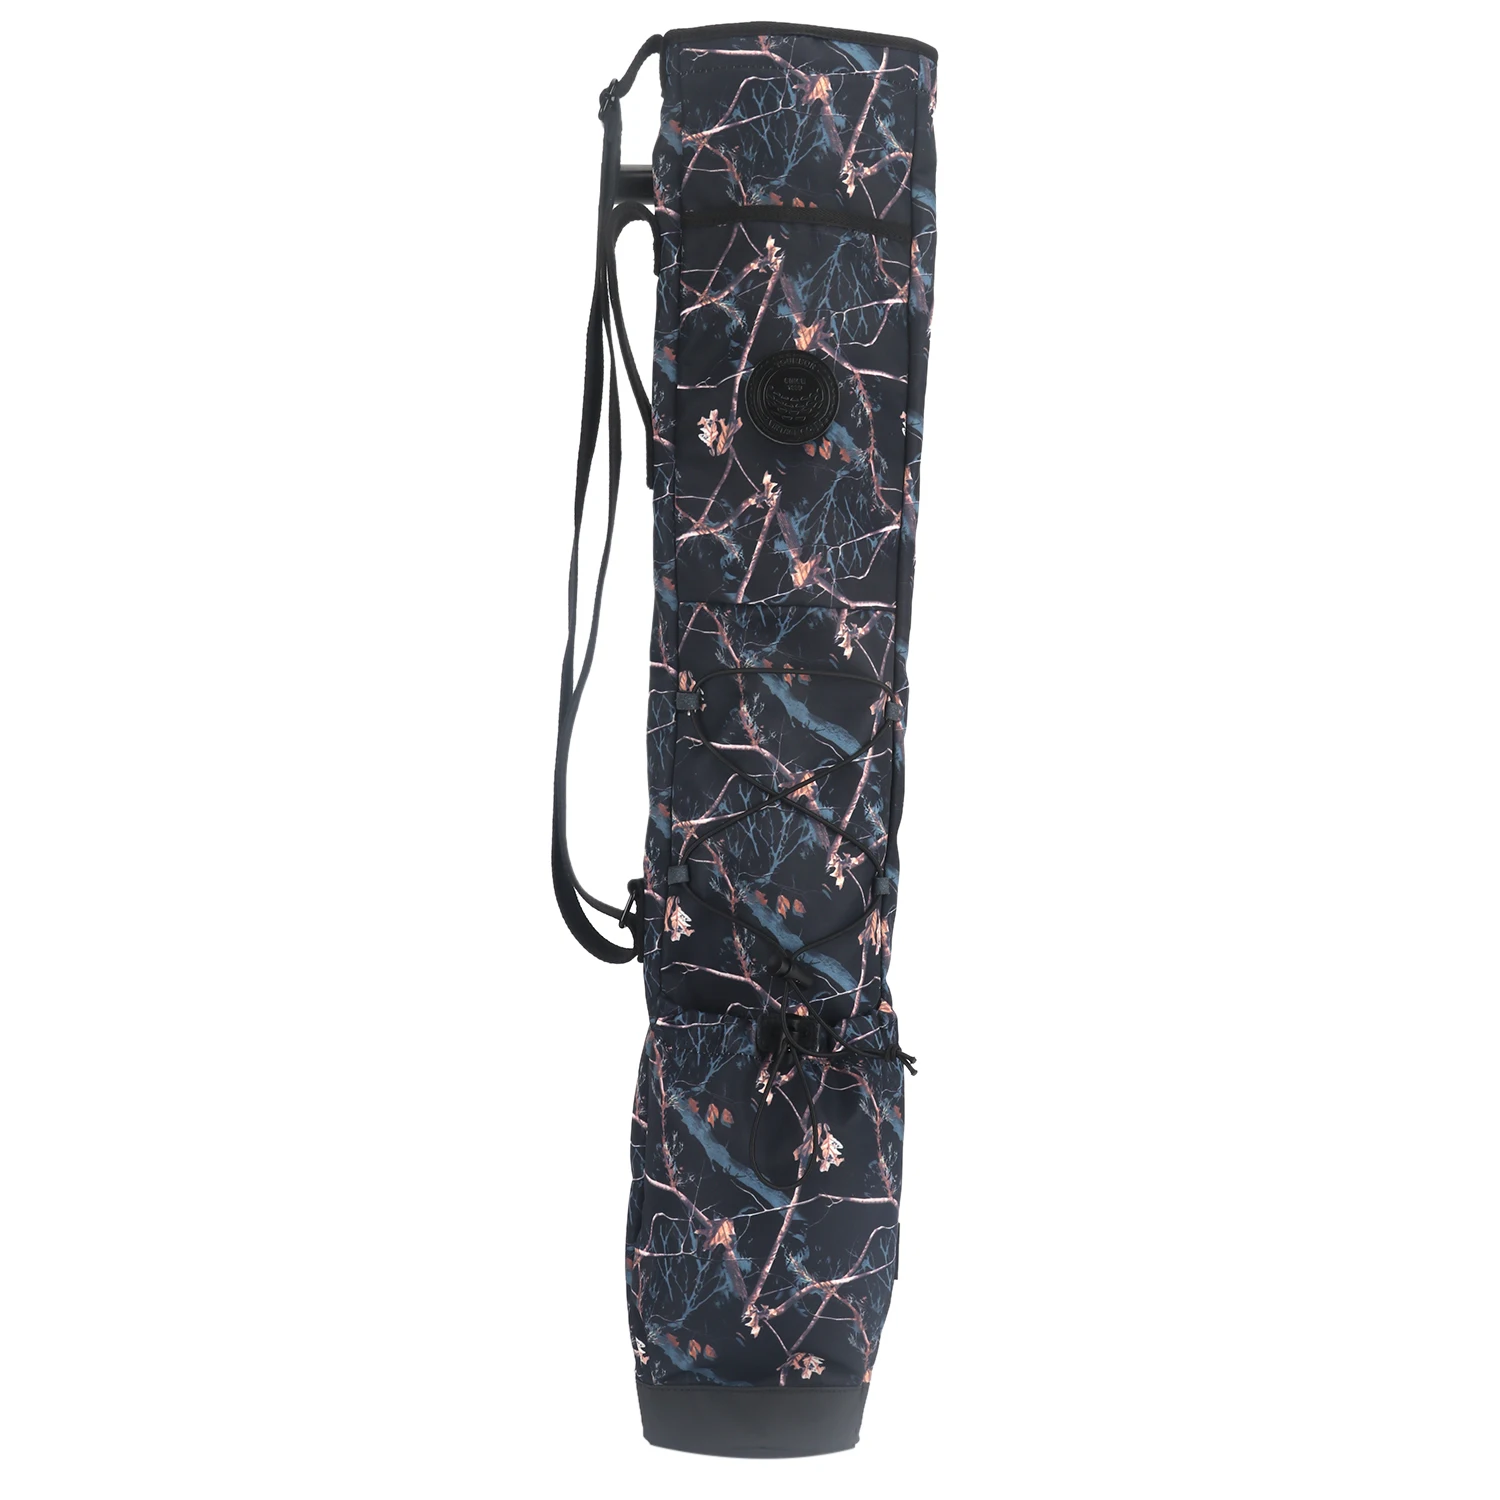 Tourbon-bolso para palos de Golf, bolsa portabotellas estilo lápiz, cubierta de nailon, 83CM